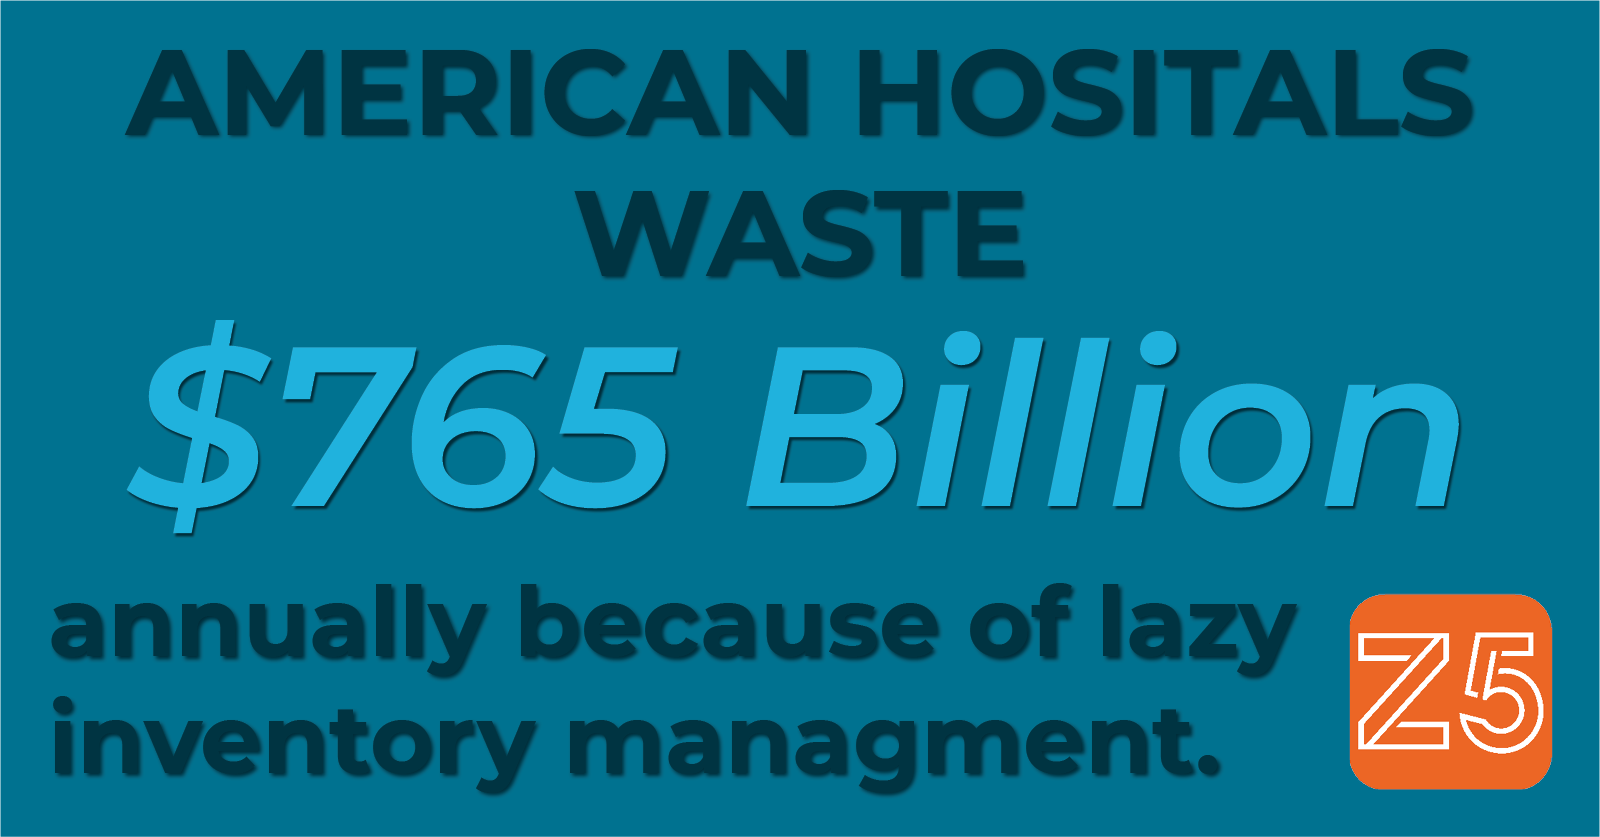 American hospitals waste 765 billion dollars annually.